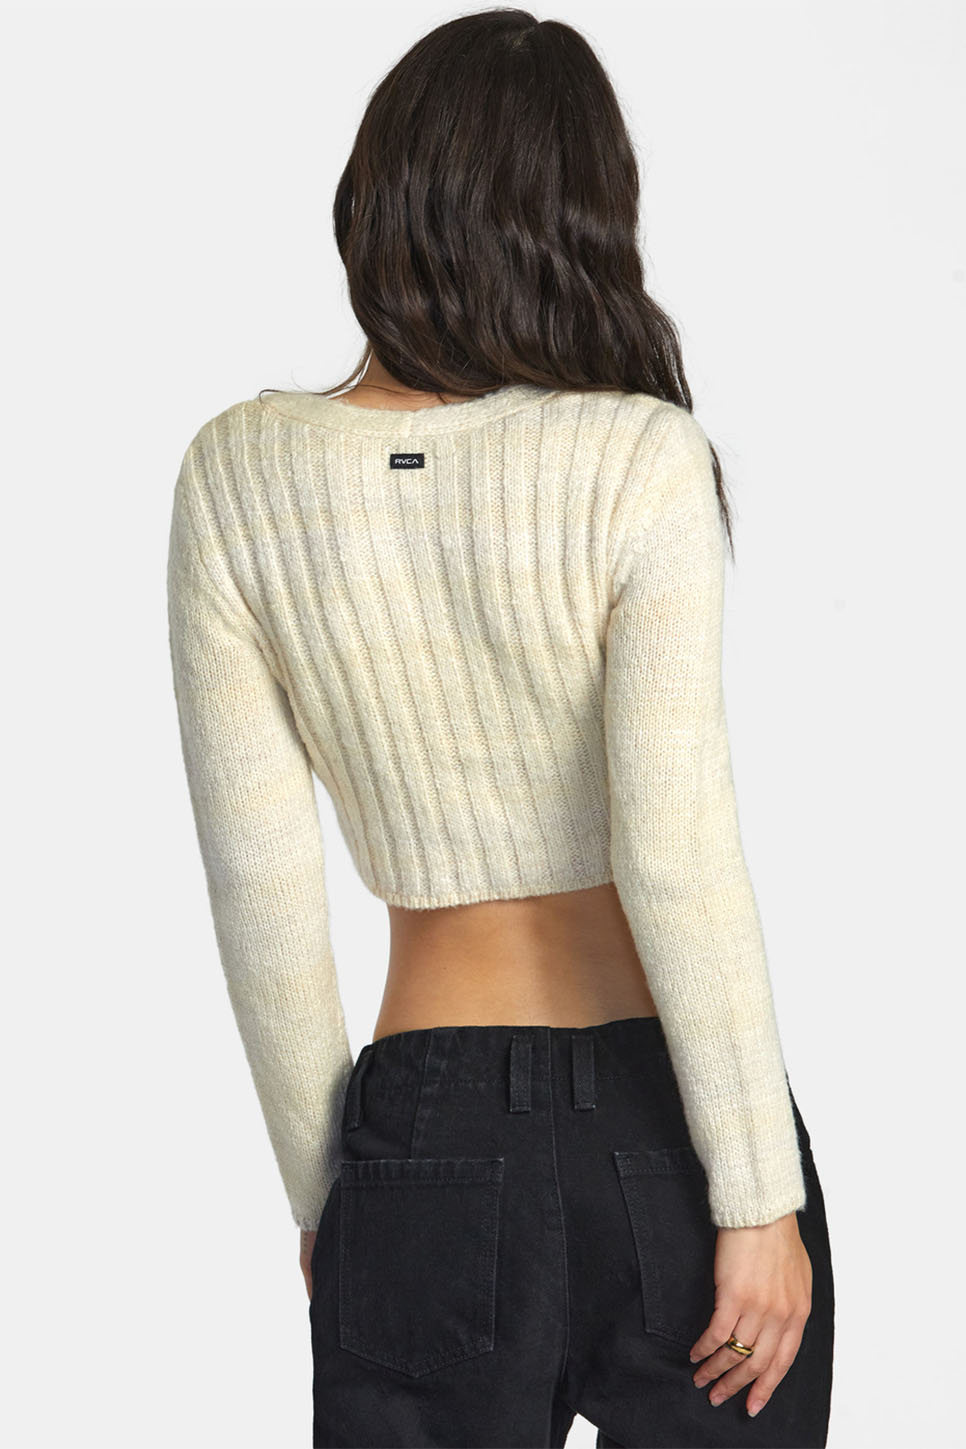 RVCA - Destiny Sweater - Latte - Back